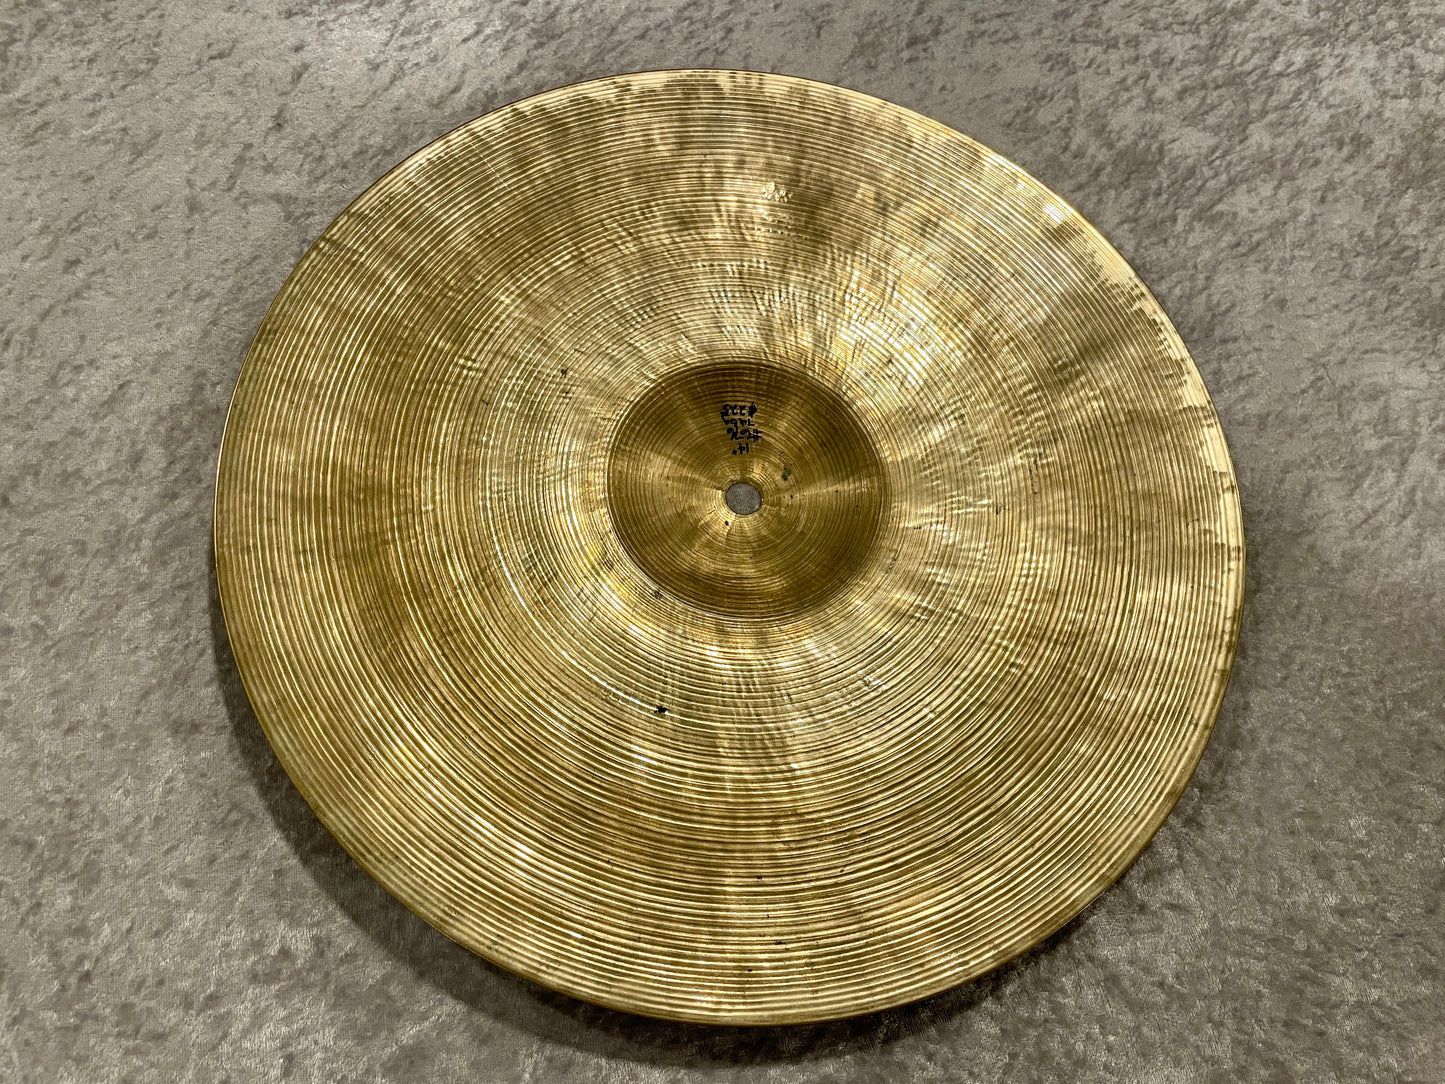 14" Zildjian K Istanbul 1959-66 Hi-Hat Single Cymbal 746g #676